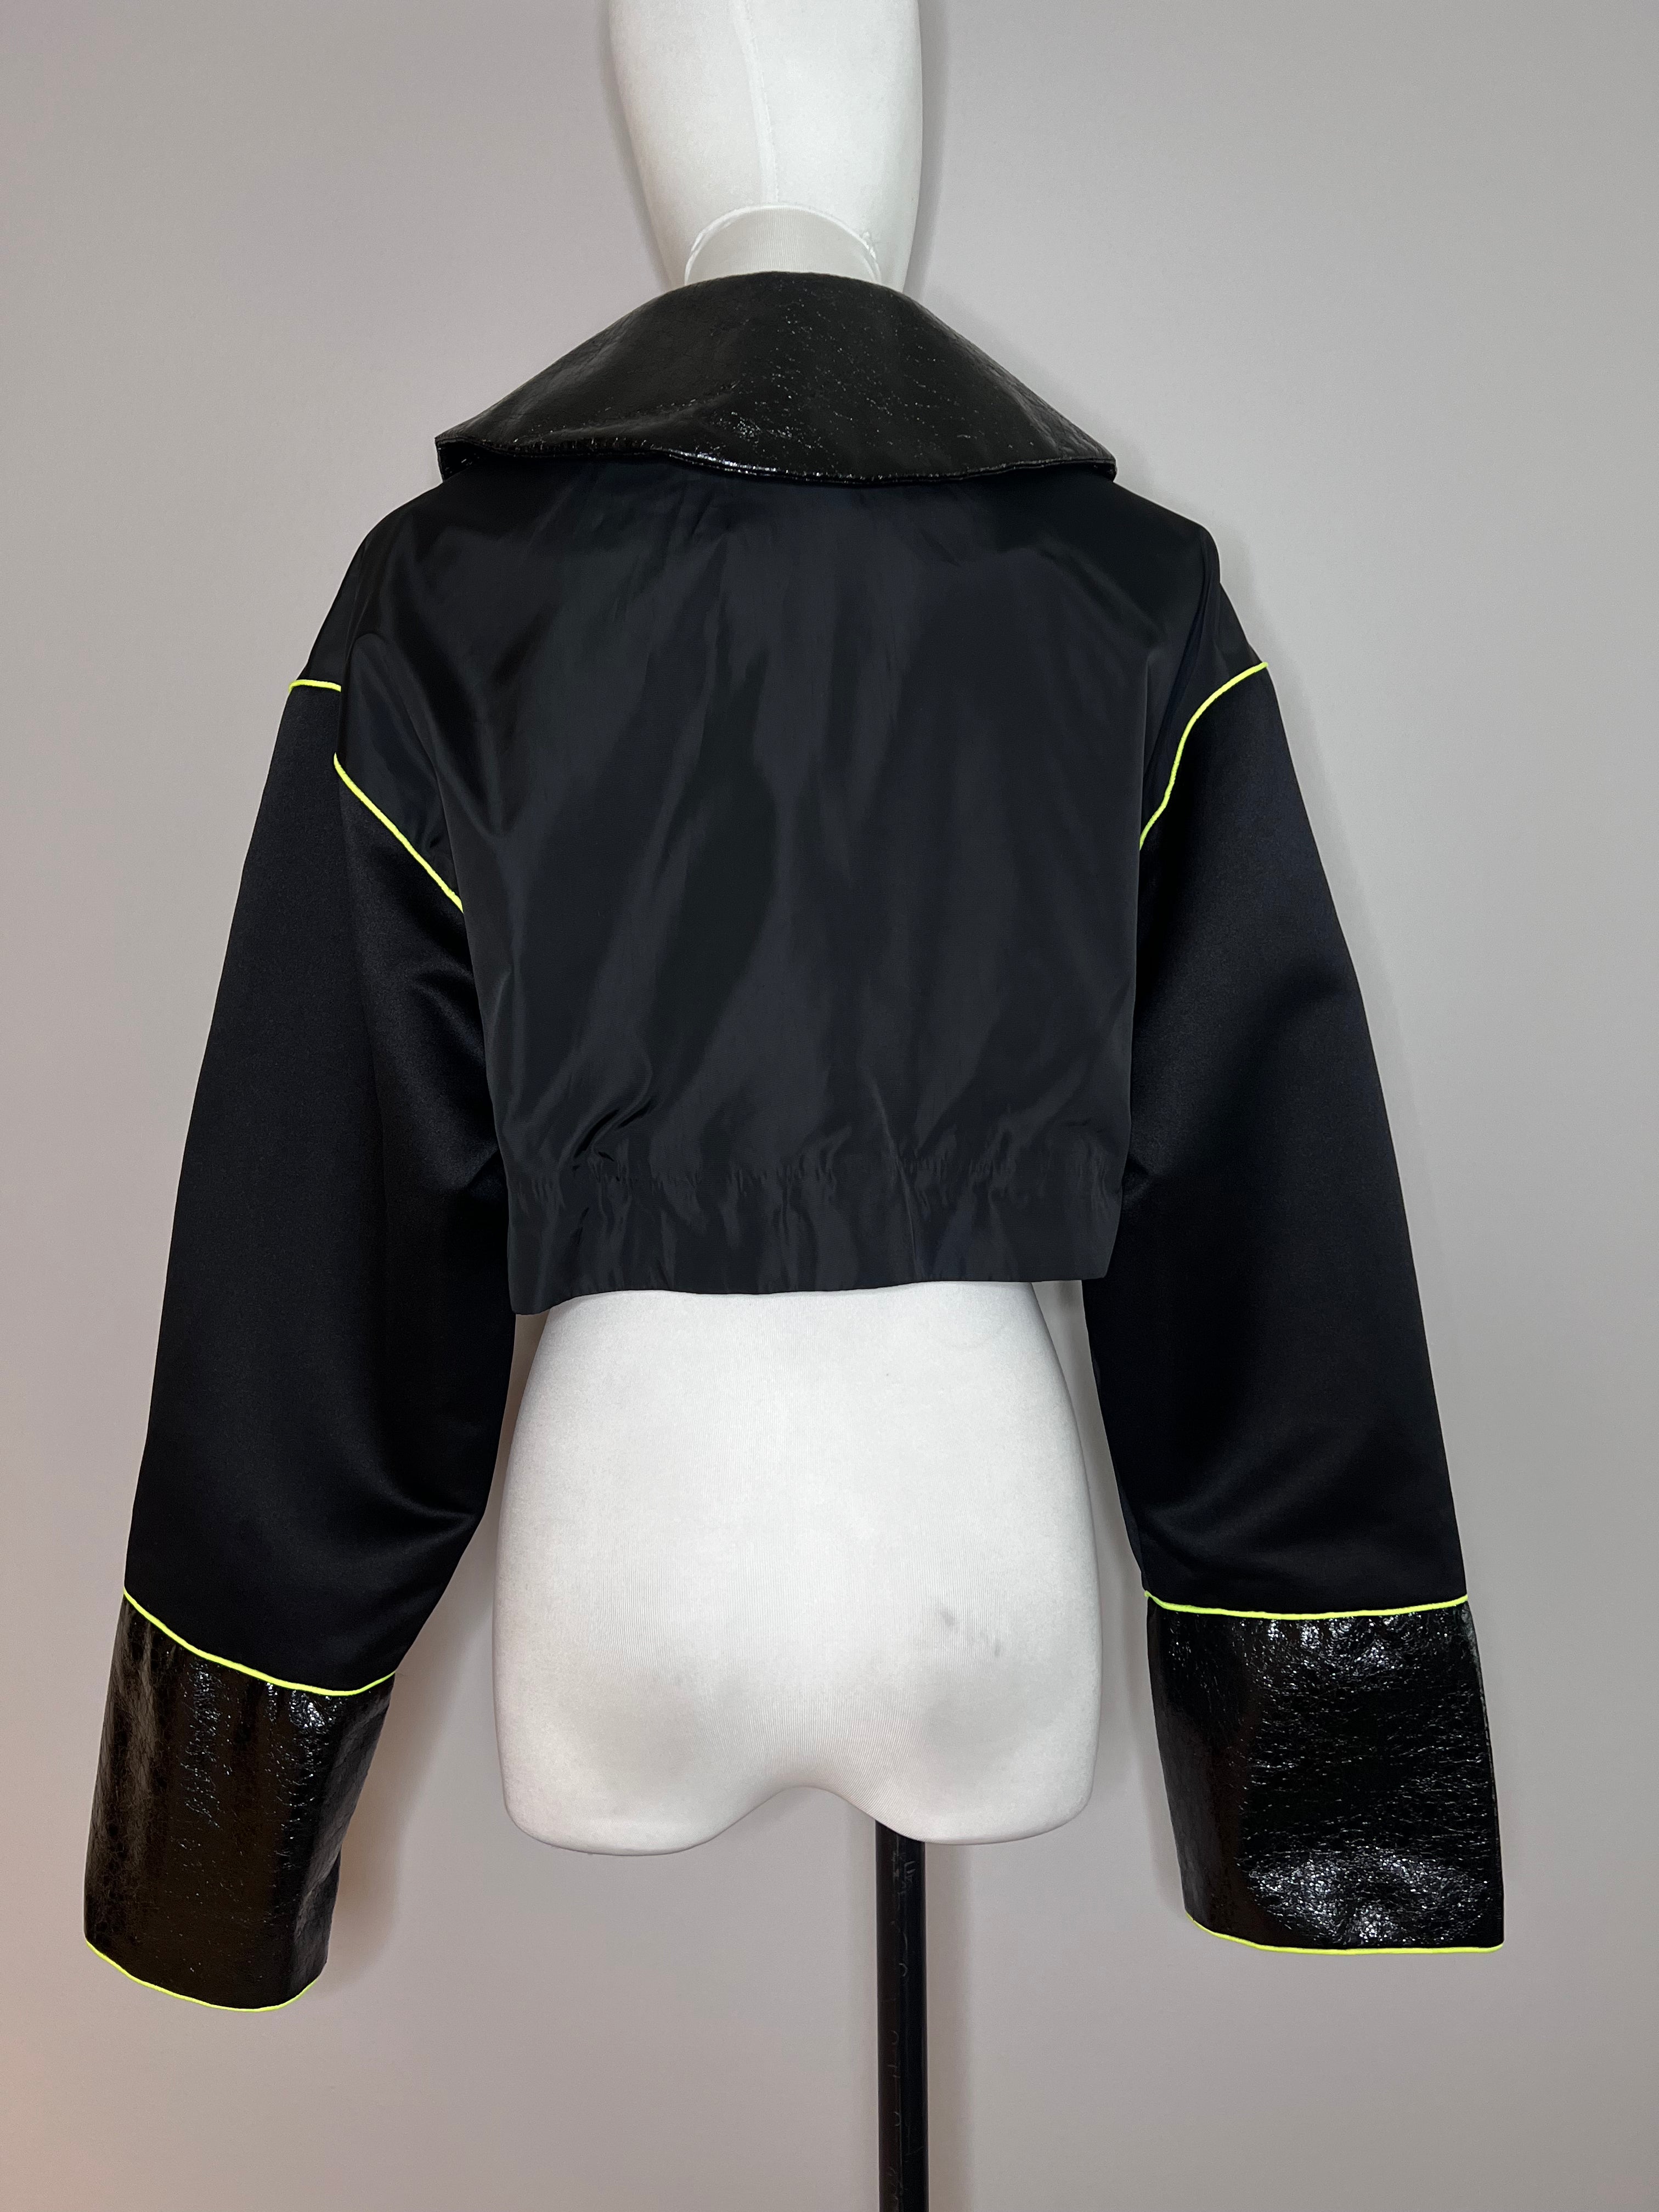 Multi fabric black cropped jacket with neon yellow lining - OHAWA FARAH SEIF